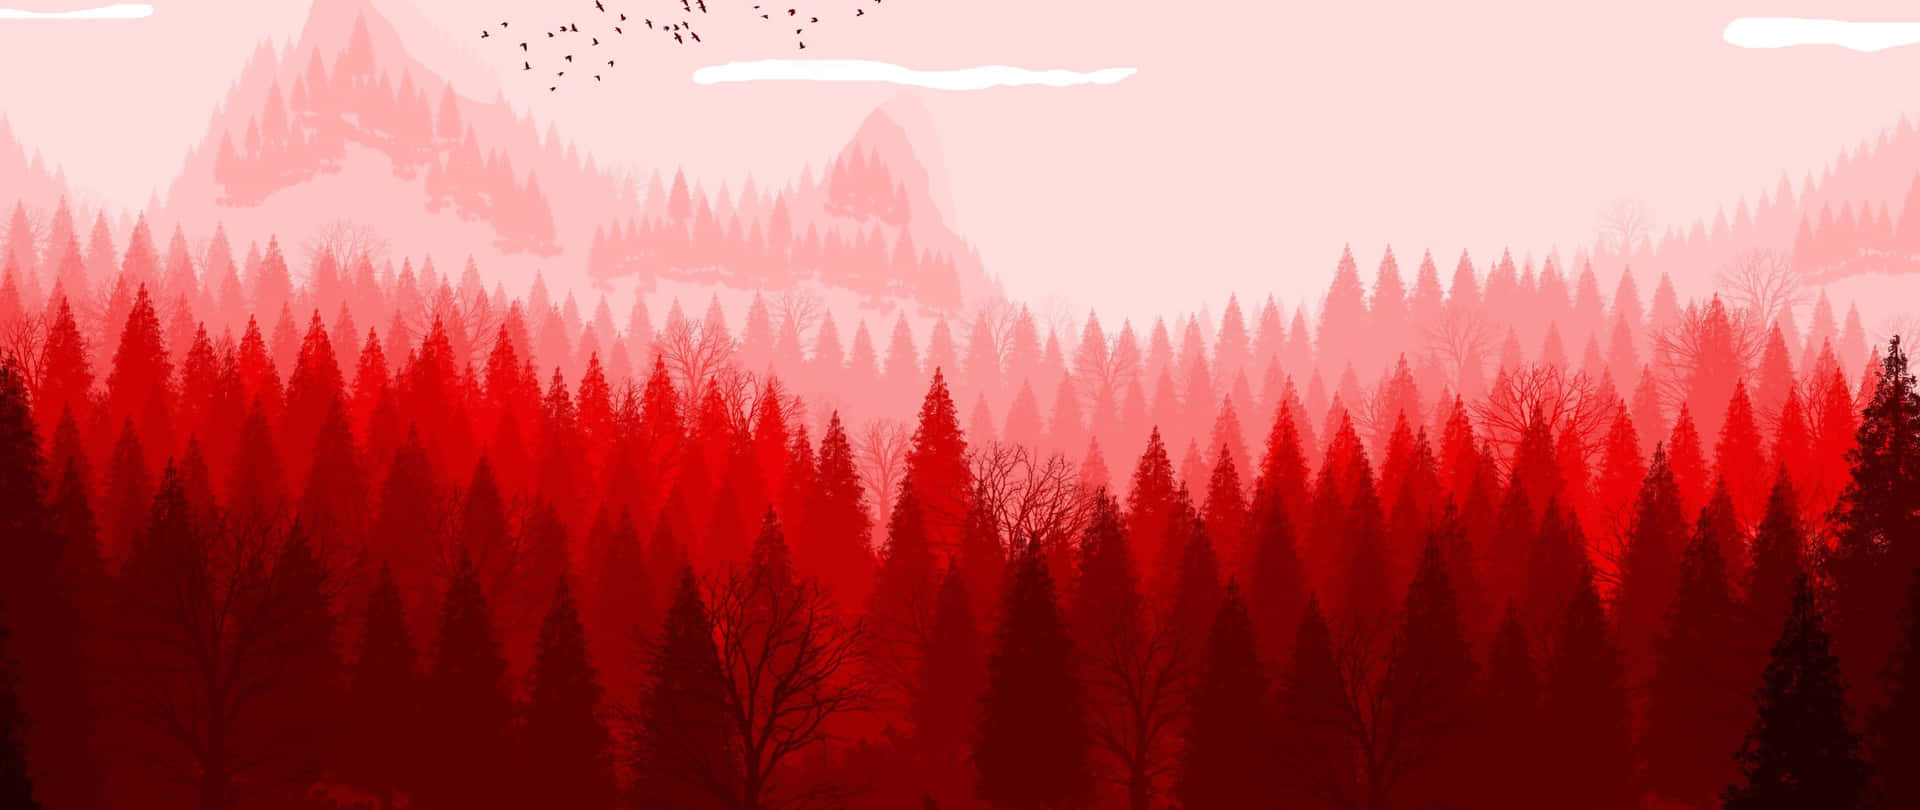 Red Aesthetic Forest Art 2560x1080 Wallpaper